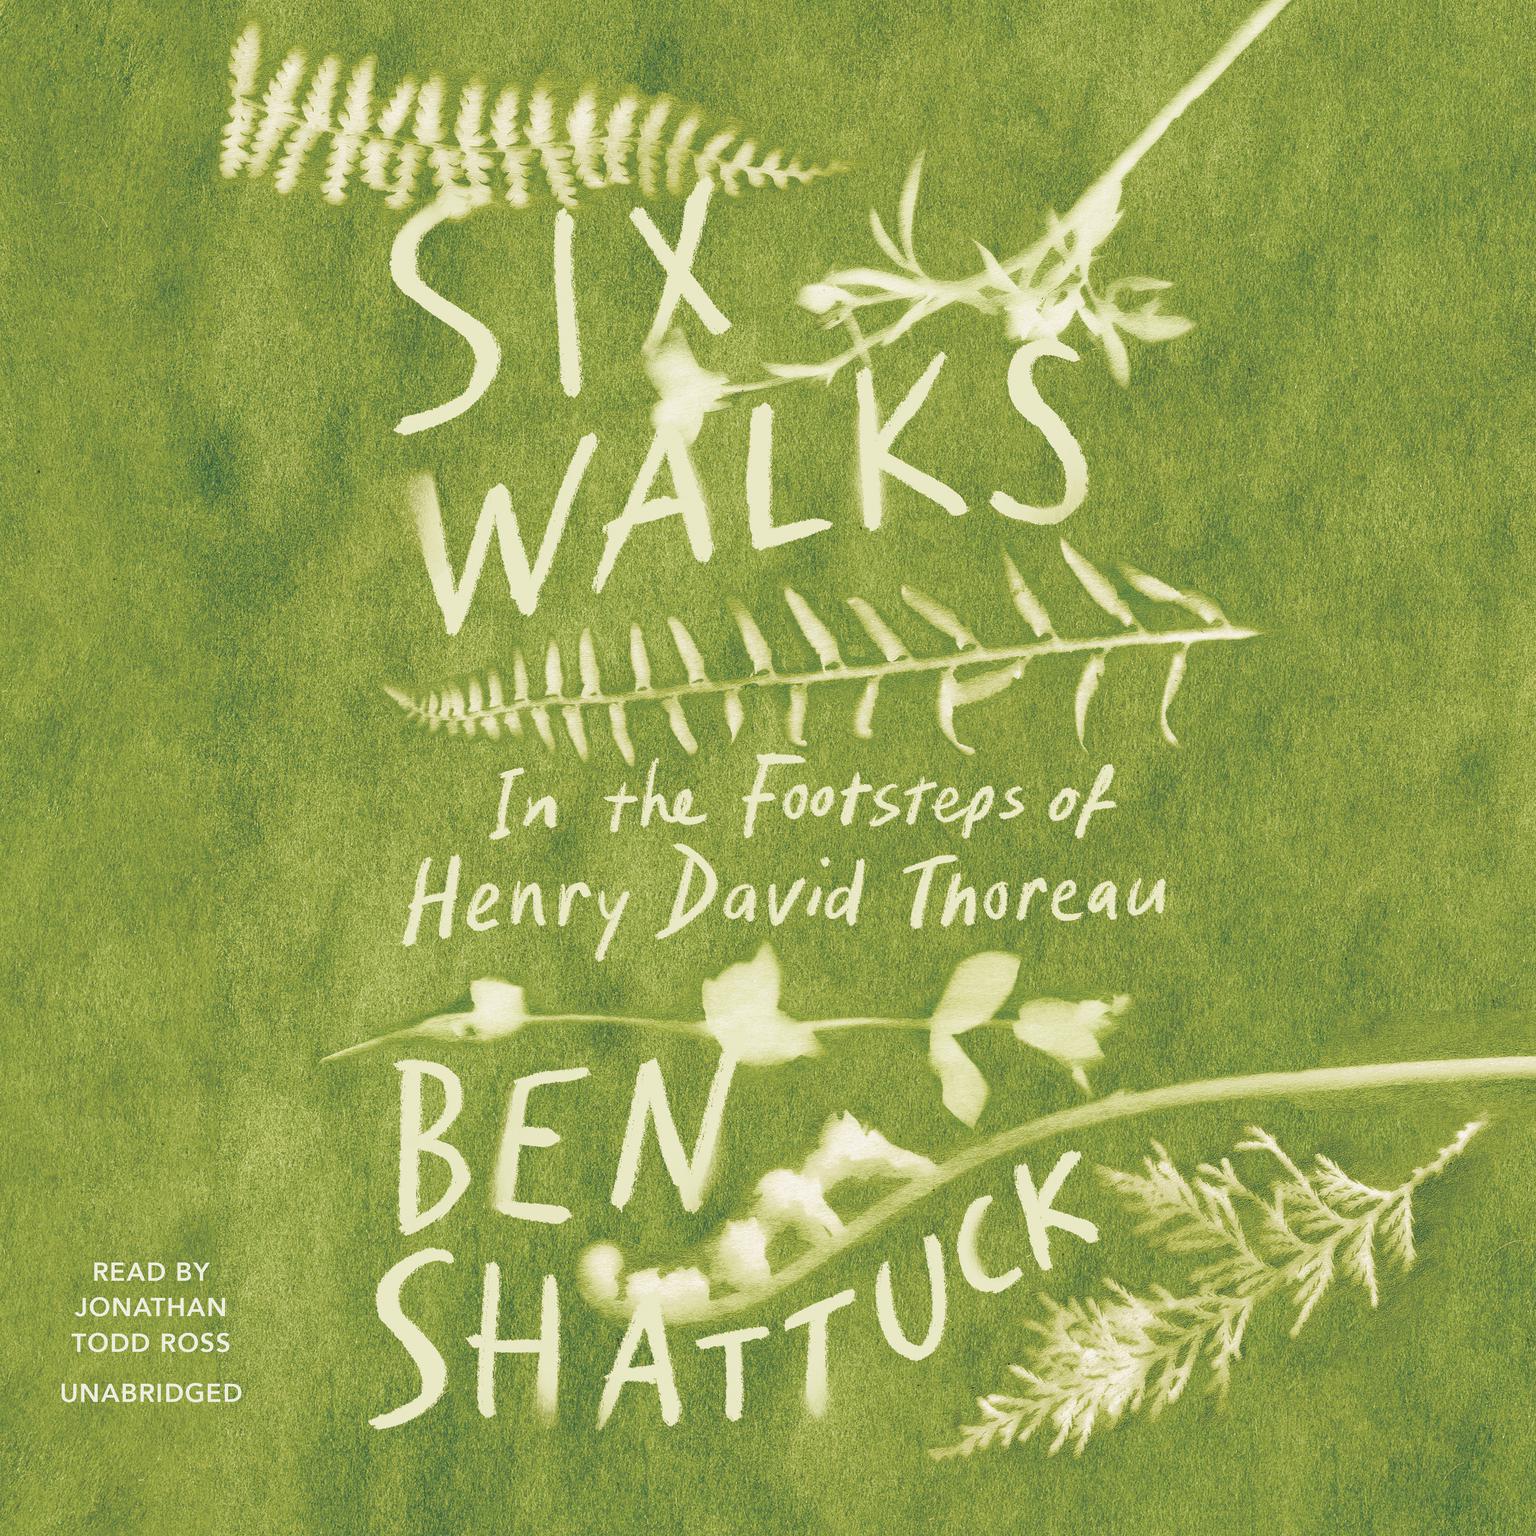 Six Walks: In the Footsteps of Henry David Thoreau Audiobook, by Ben Shattuck